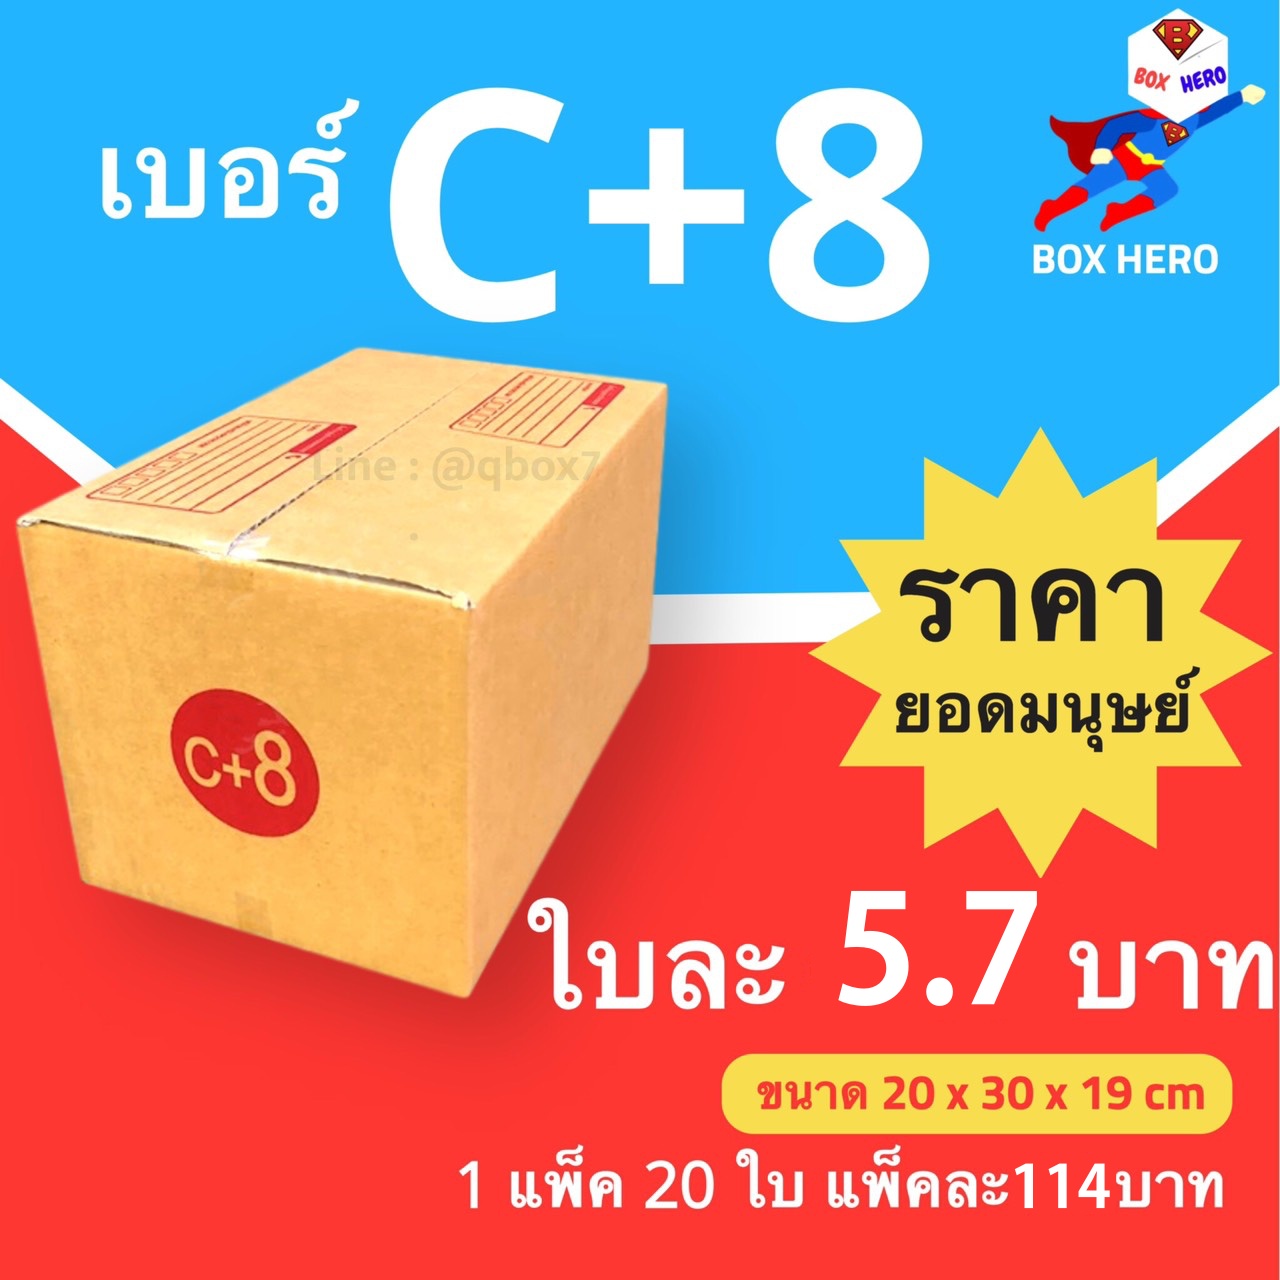 BoxHero กล่องไปรษณีย์เบอร์ C+8 มีพิมพ์จ่าหน้า กล่องพัสดุ (20 ใบ 94 บาท)